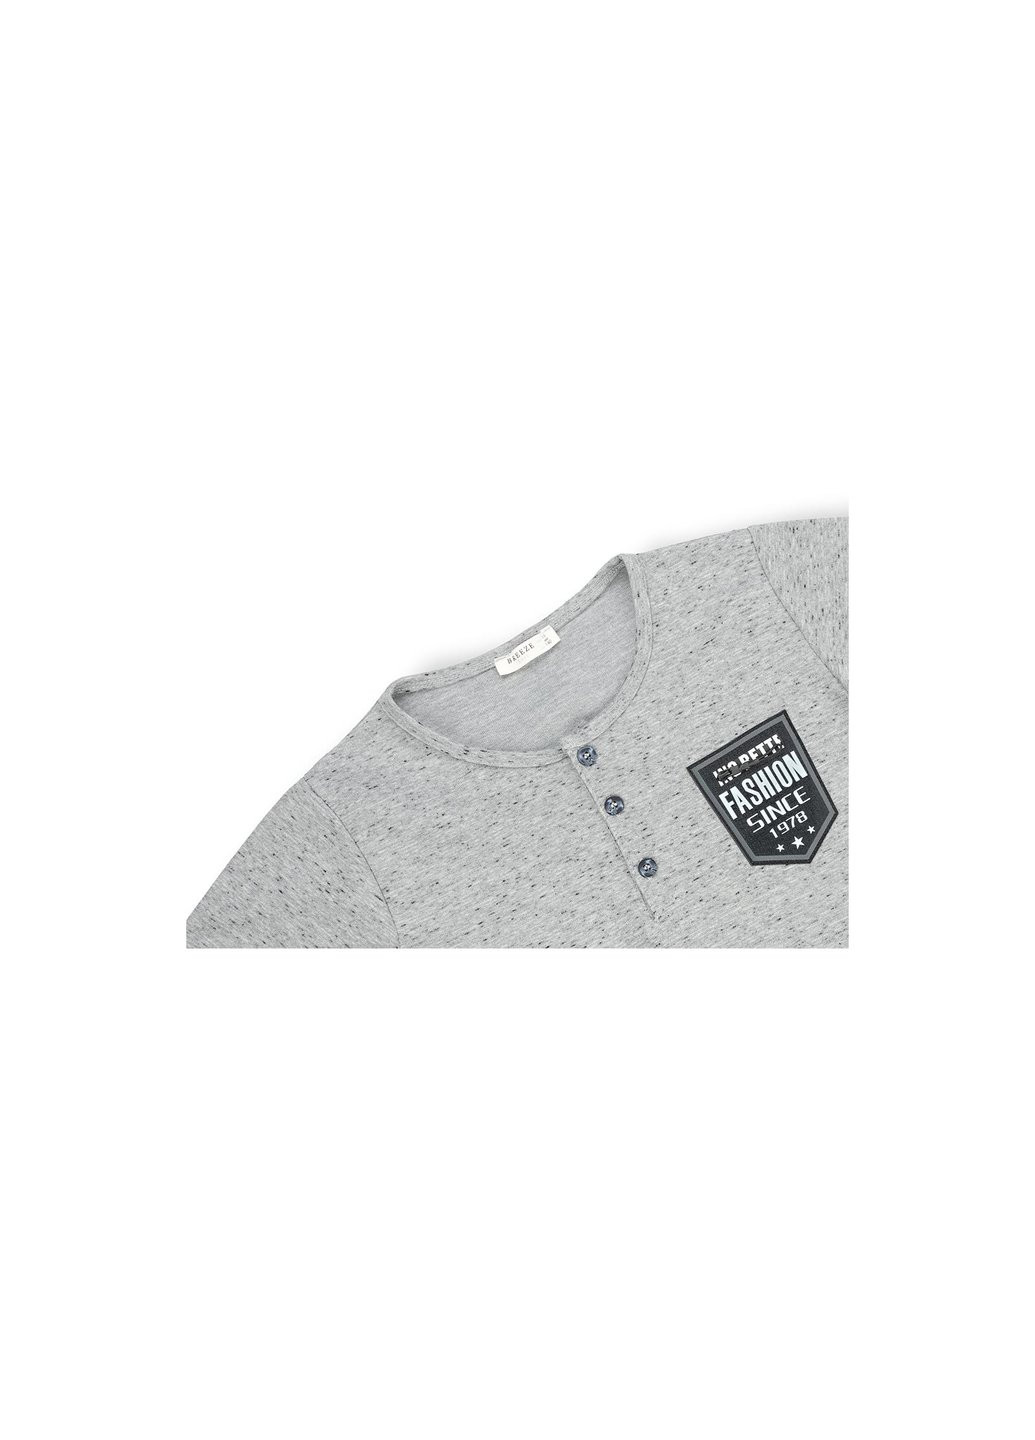 Кофта с карманчиком (11661-152B-gray) Breeze (257209016)